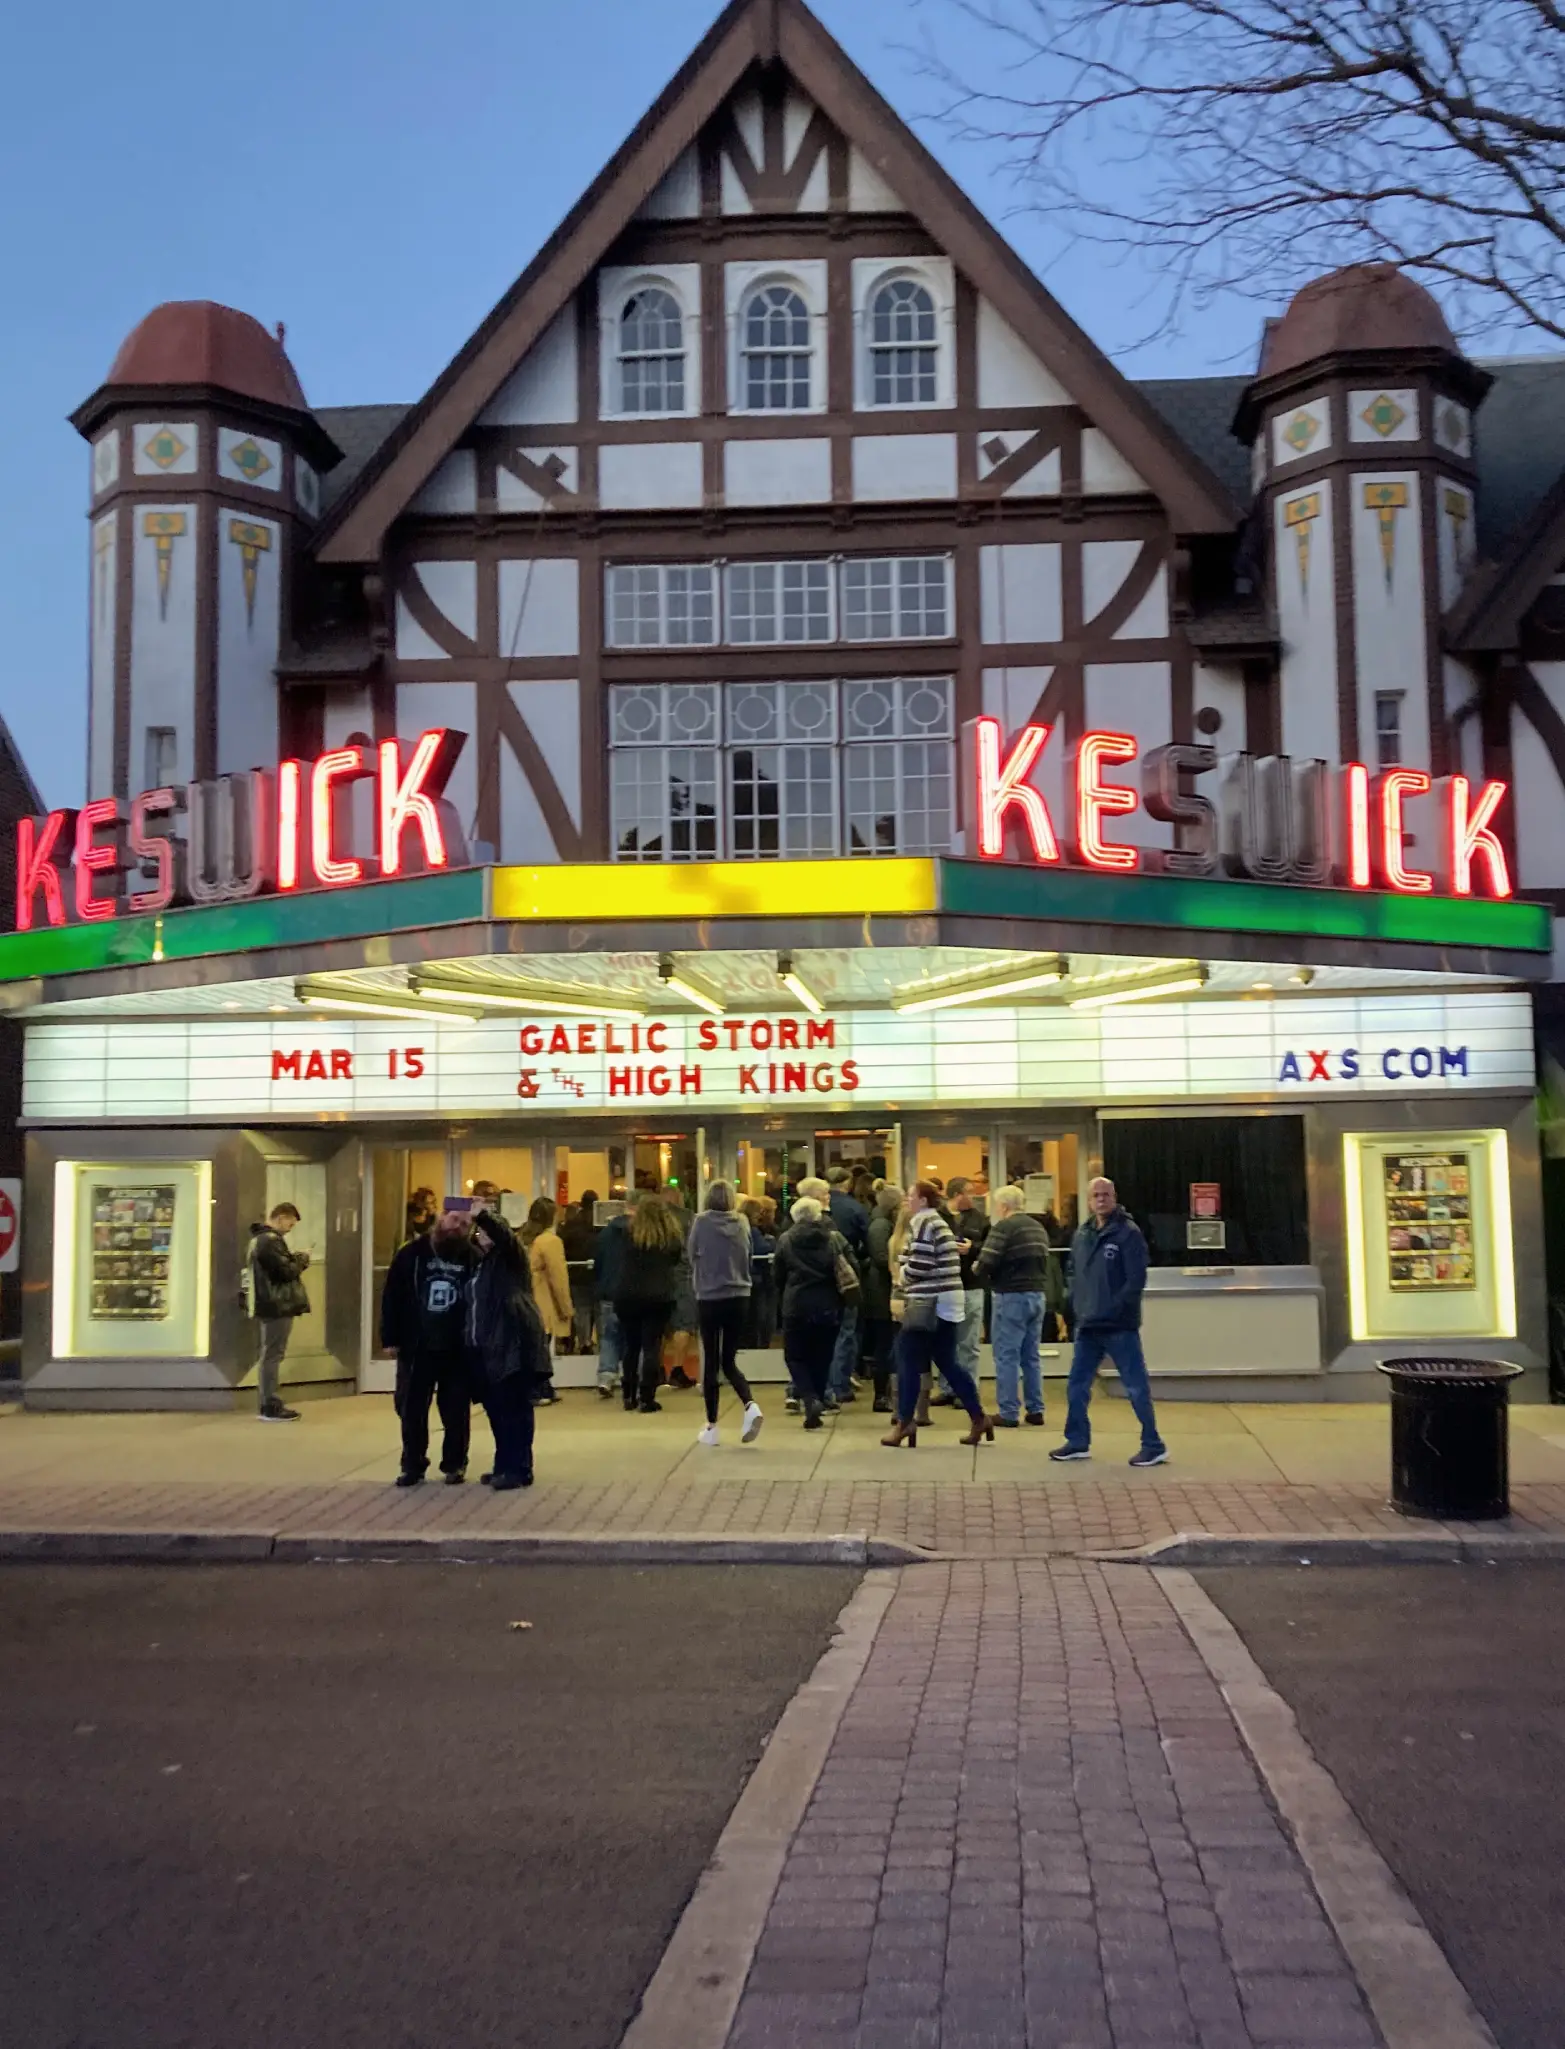 The Keswick Theater at dusk